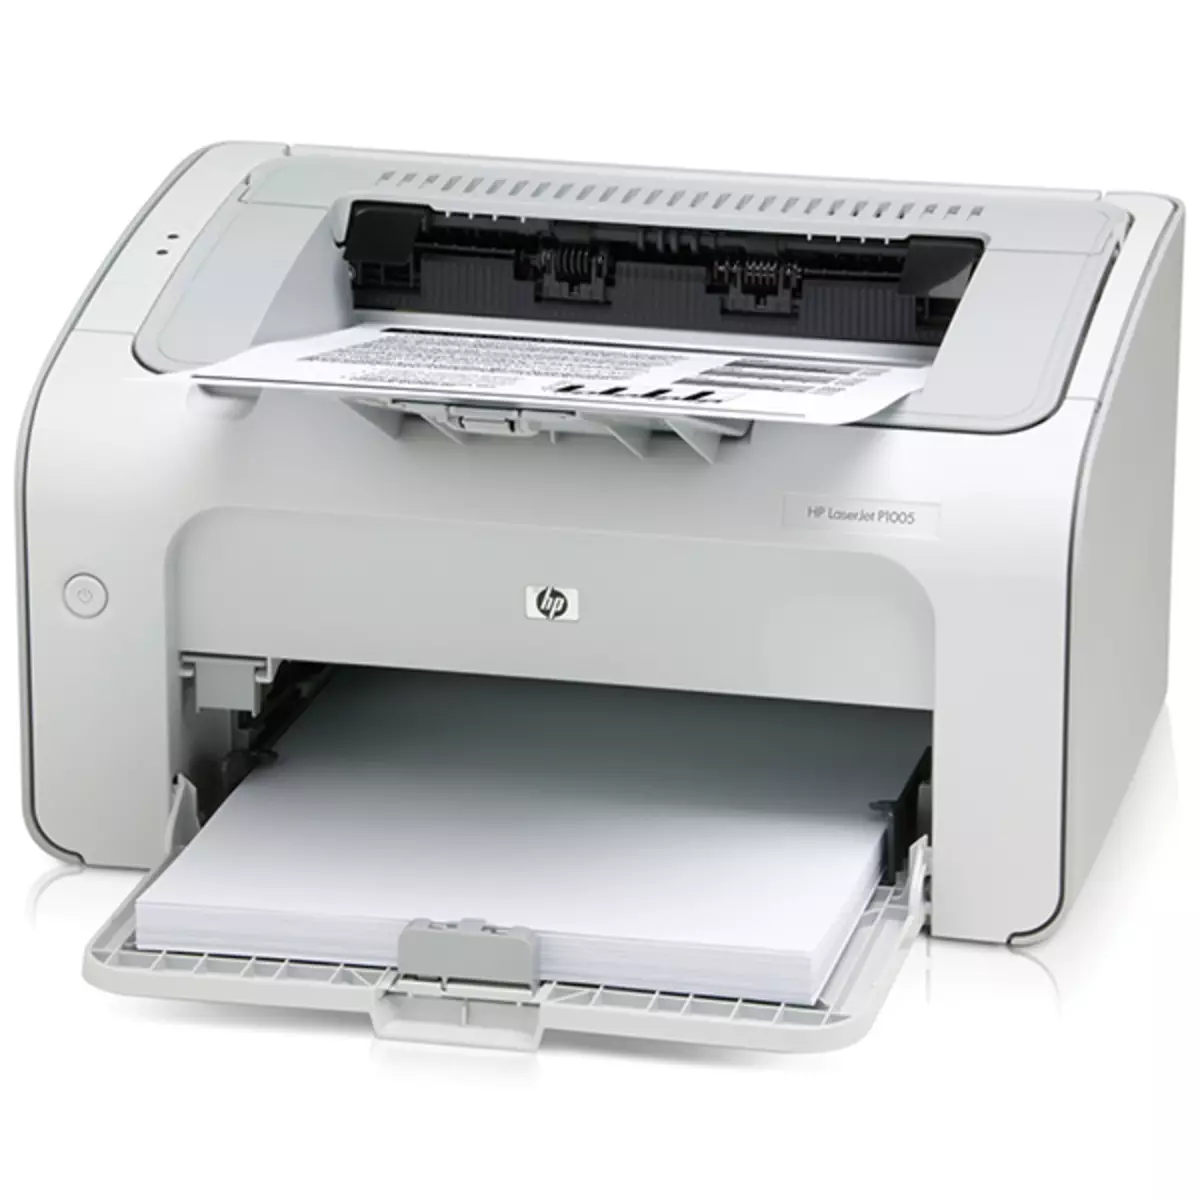 Descargar Drivers for Printer HP Laserjet P1005